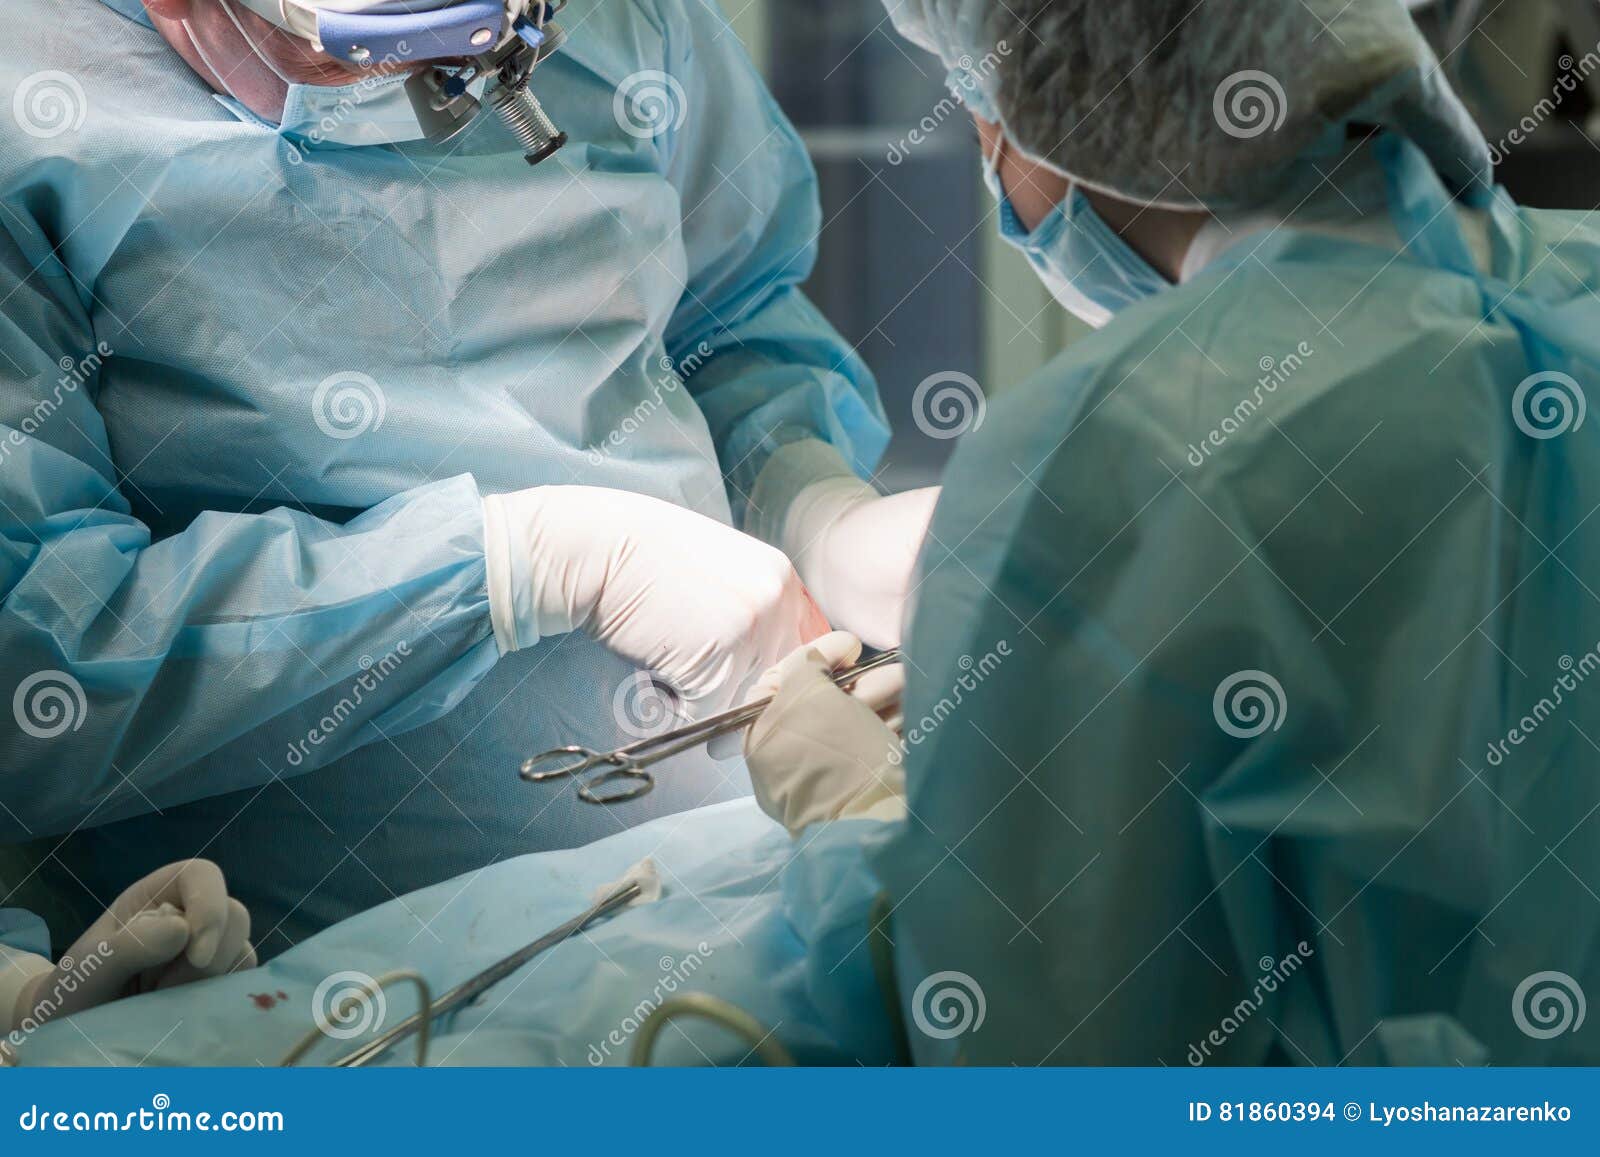 surgeon performing nose reshaping. rhinoplasty